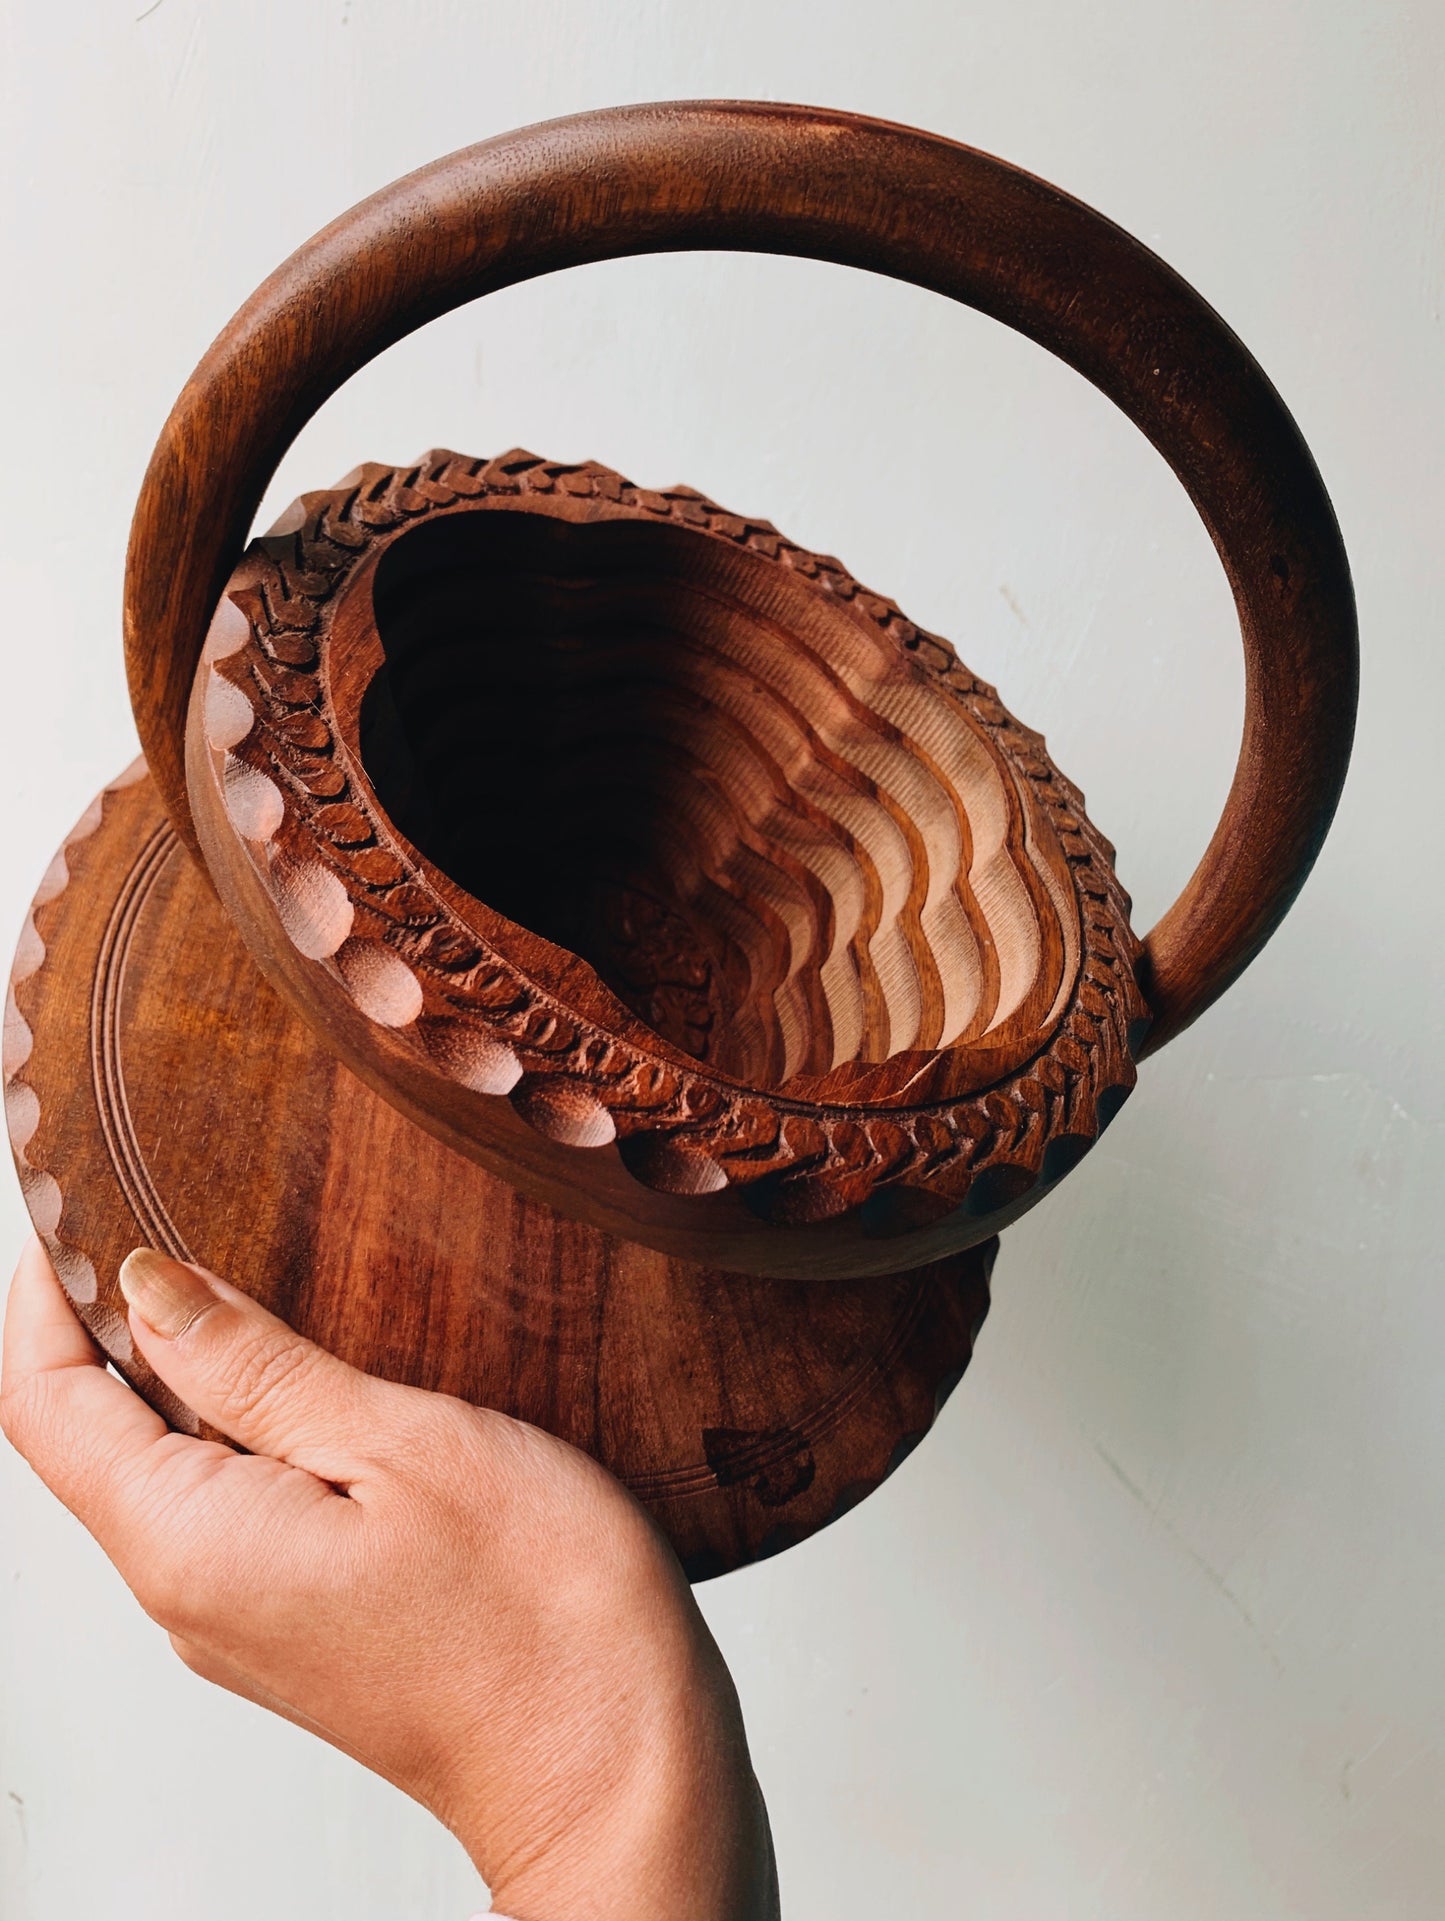 Rustic Decorative Basket